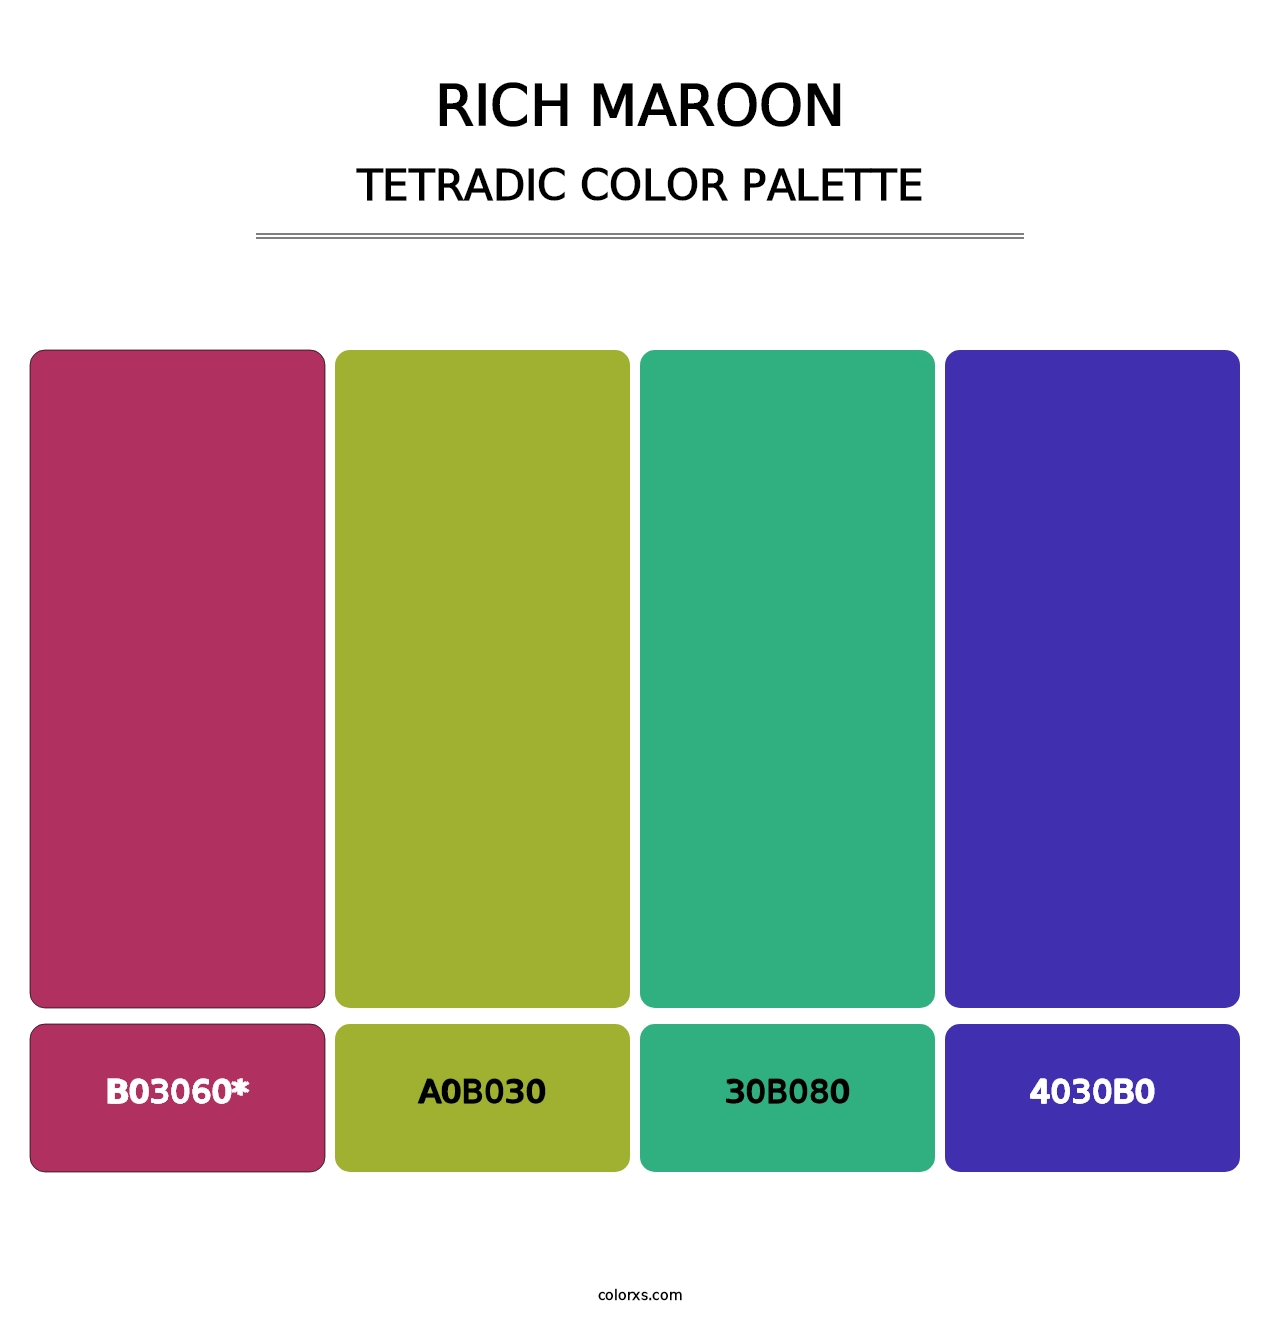 Rich Maroon - Tetradic Color Palette